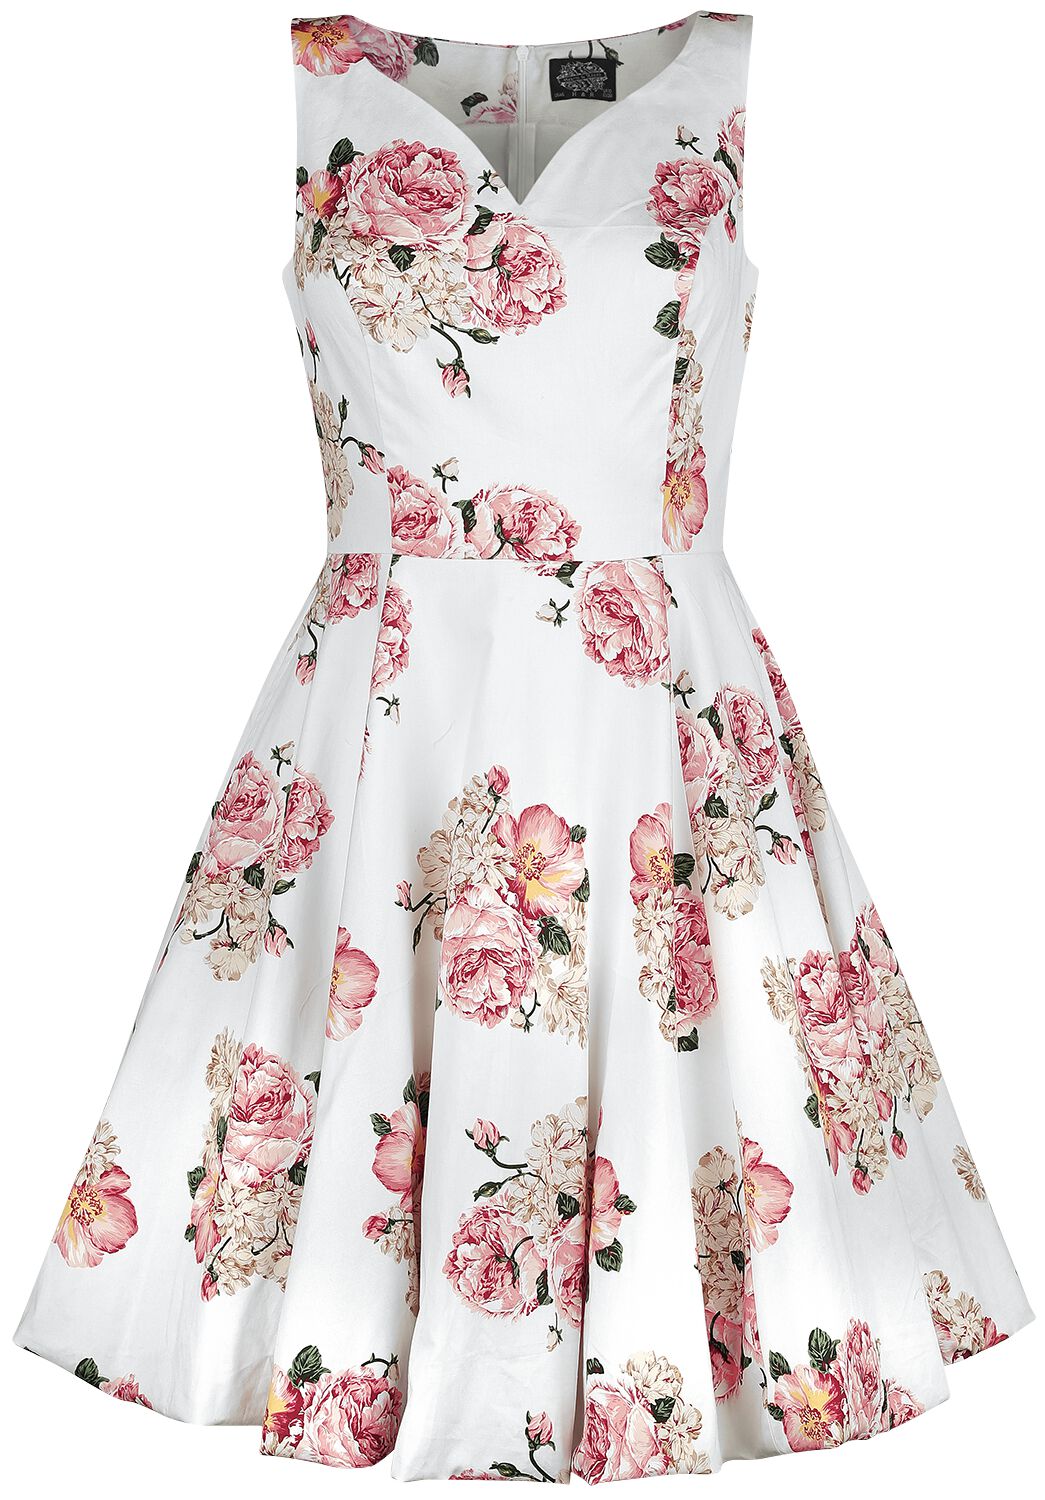 H&R London - Rockabilly Kleid knielang - Taraneh Swing Dress - XS bis 6XL - für Damen - Größe 6XL - weiß/rosa